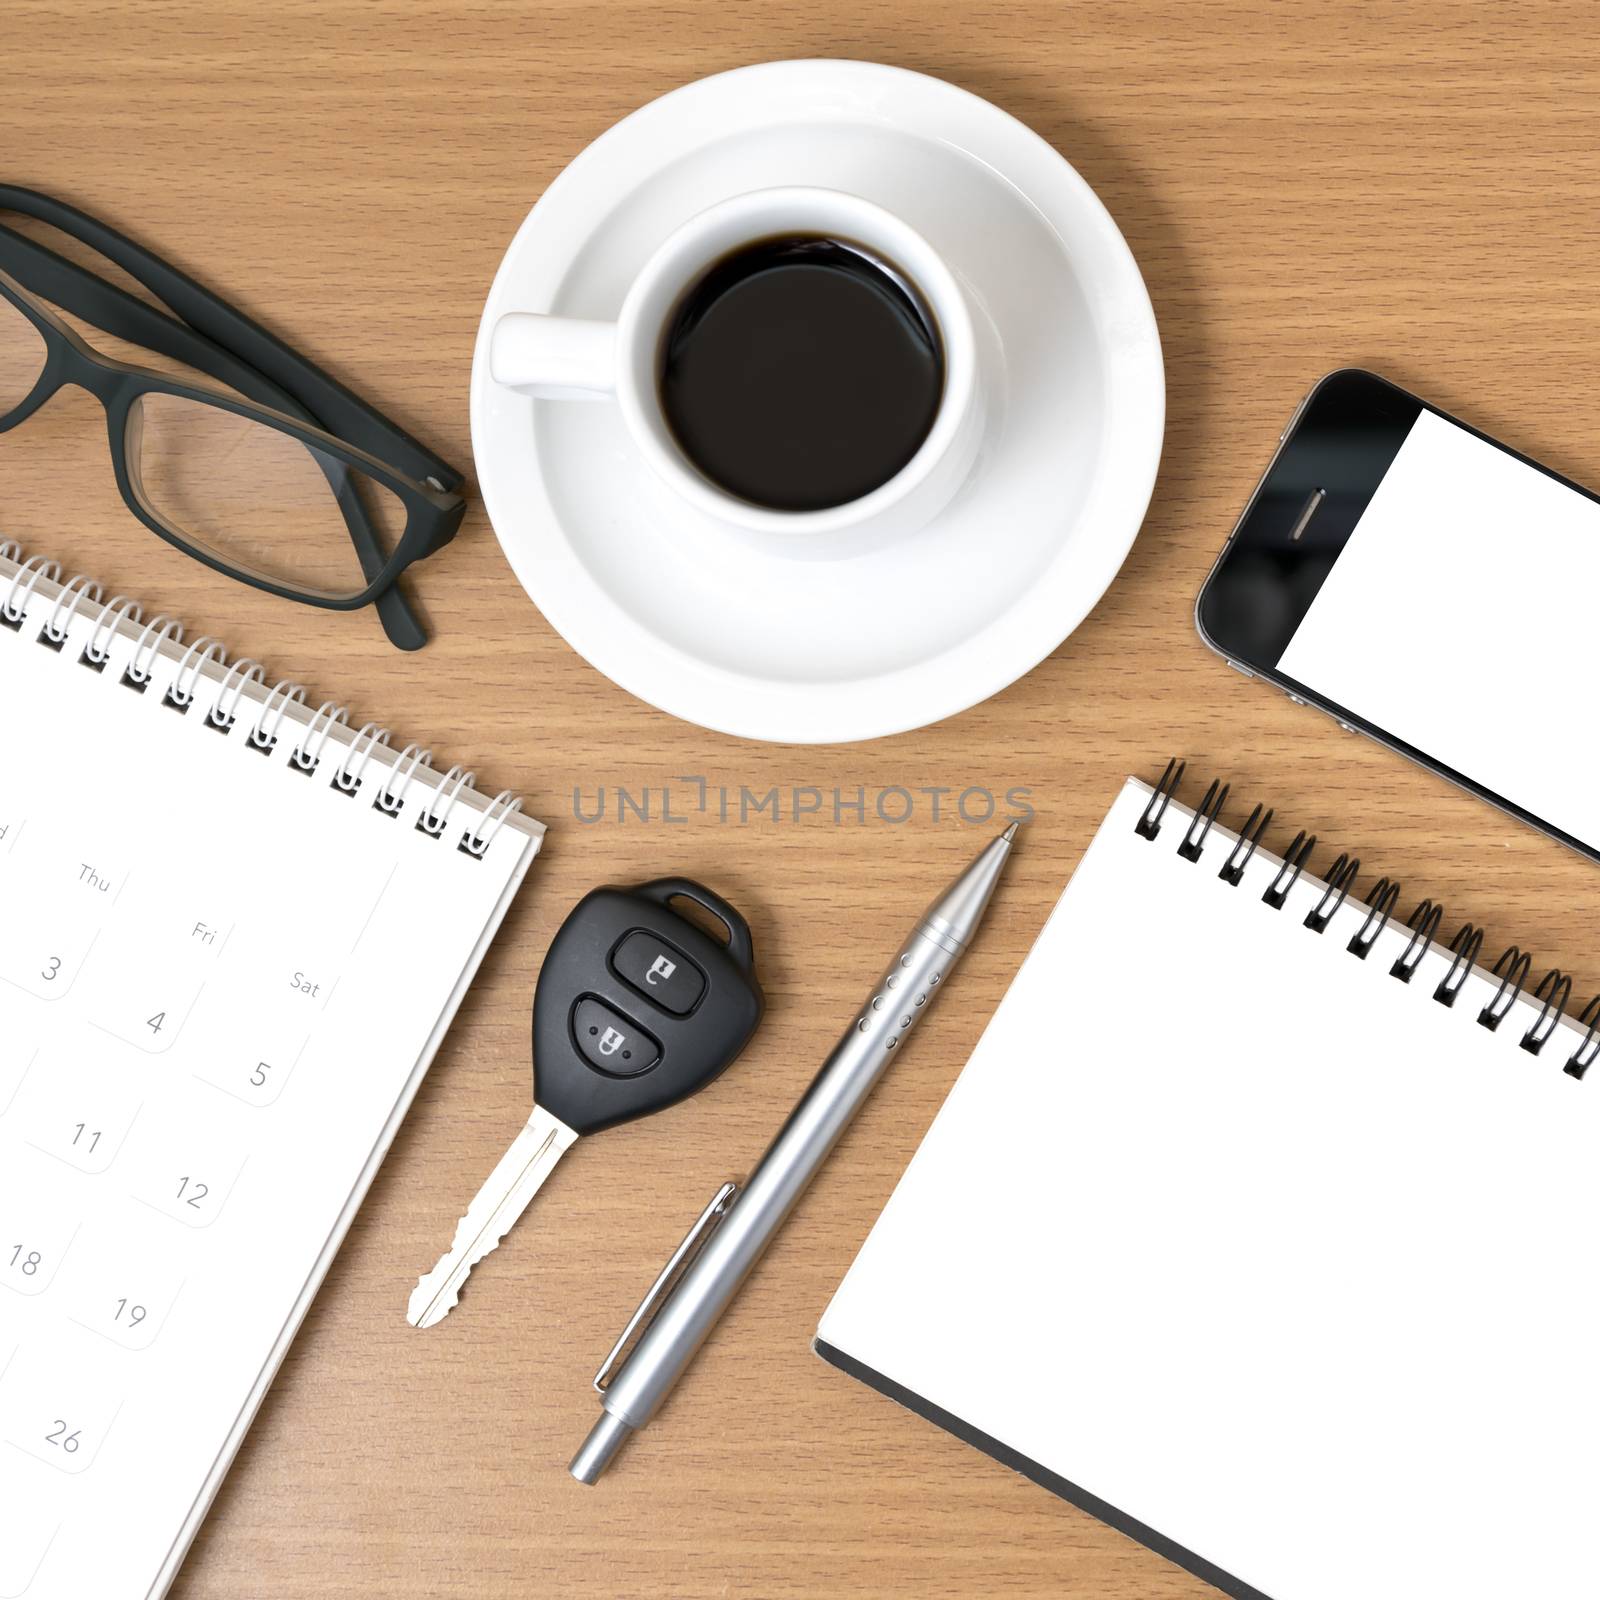 coffee and phone with car key,eyeglasses,notepad,calendar by ammza12